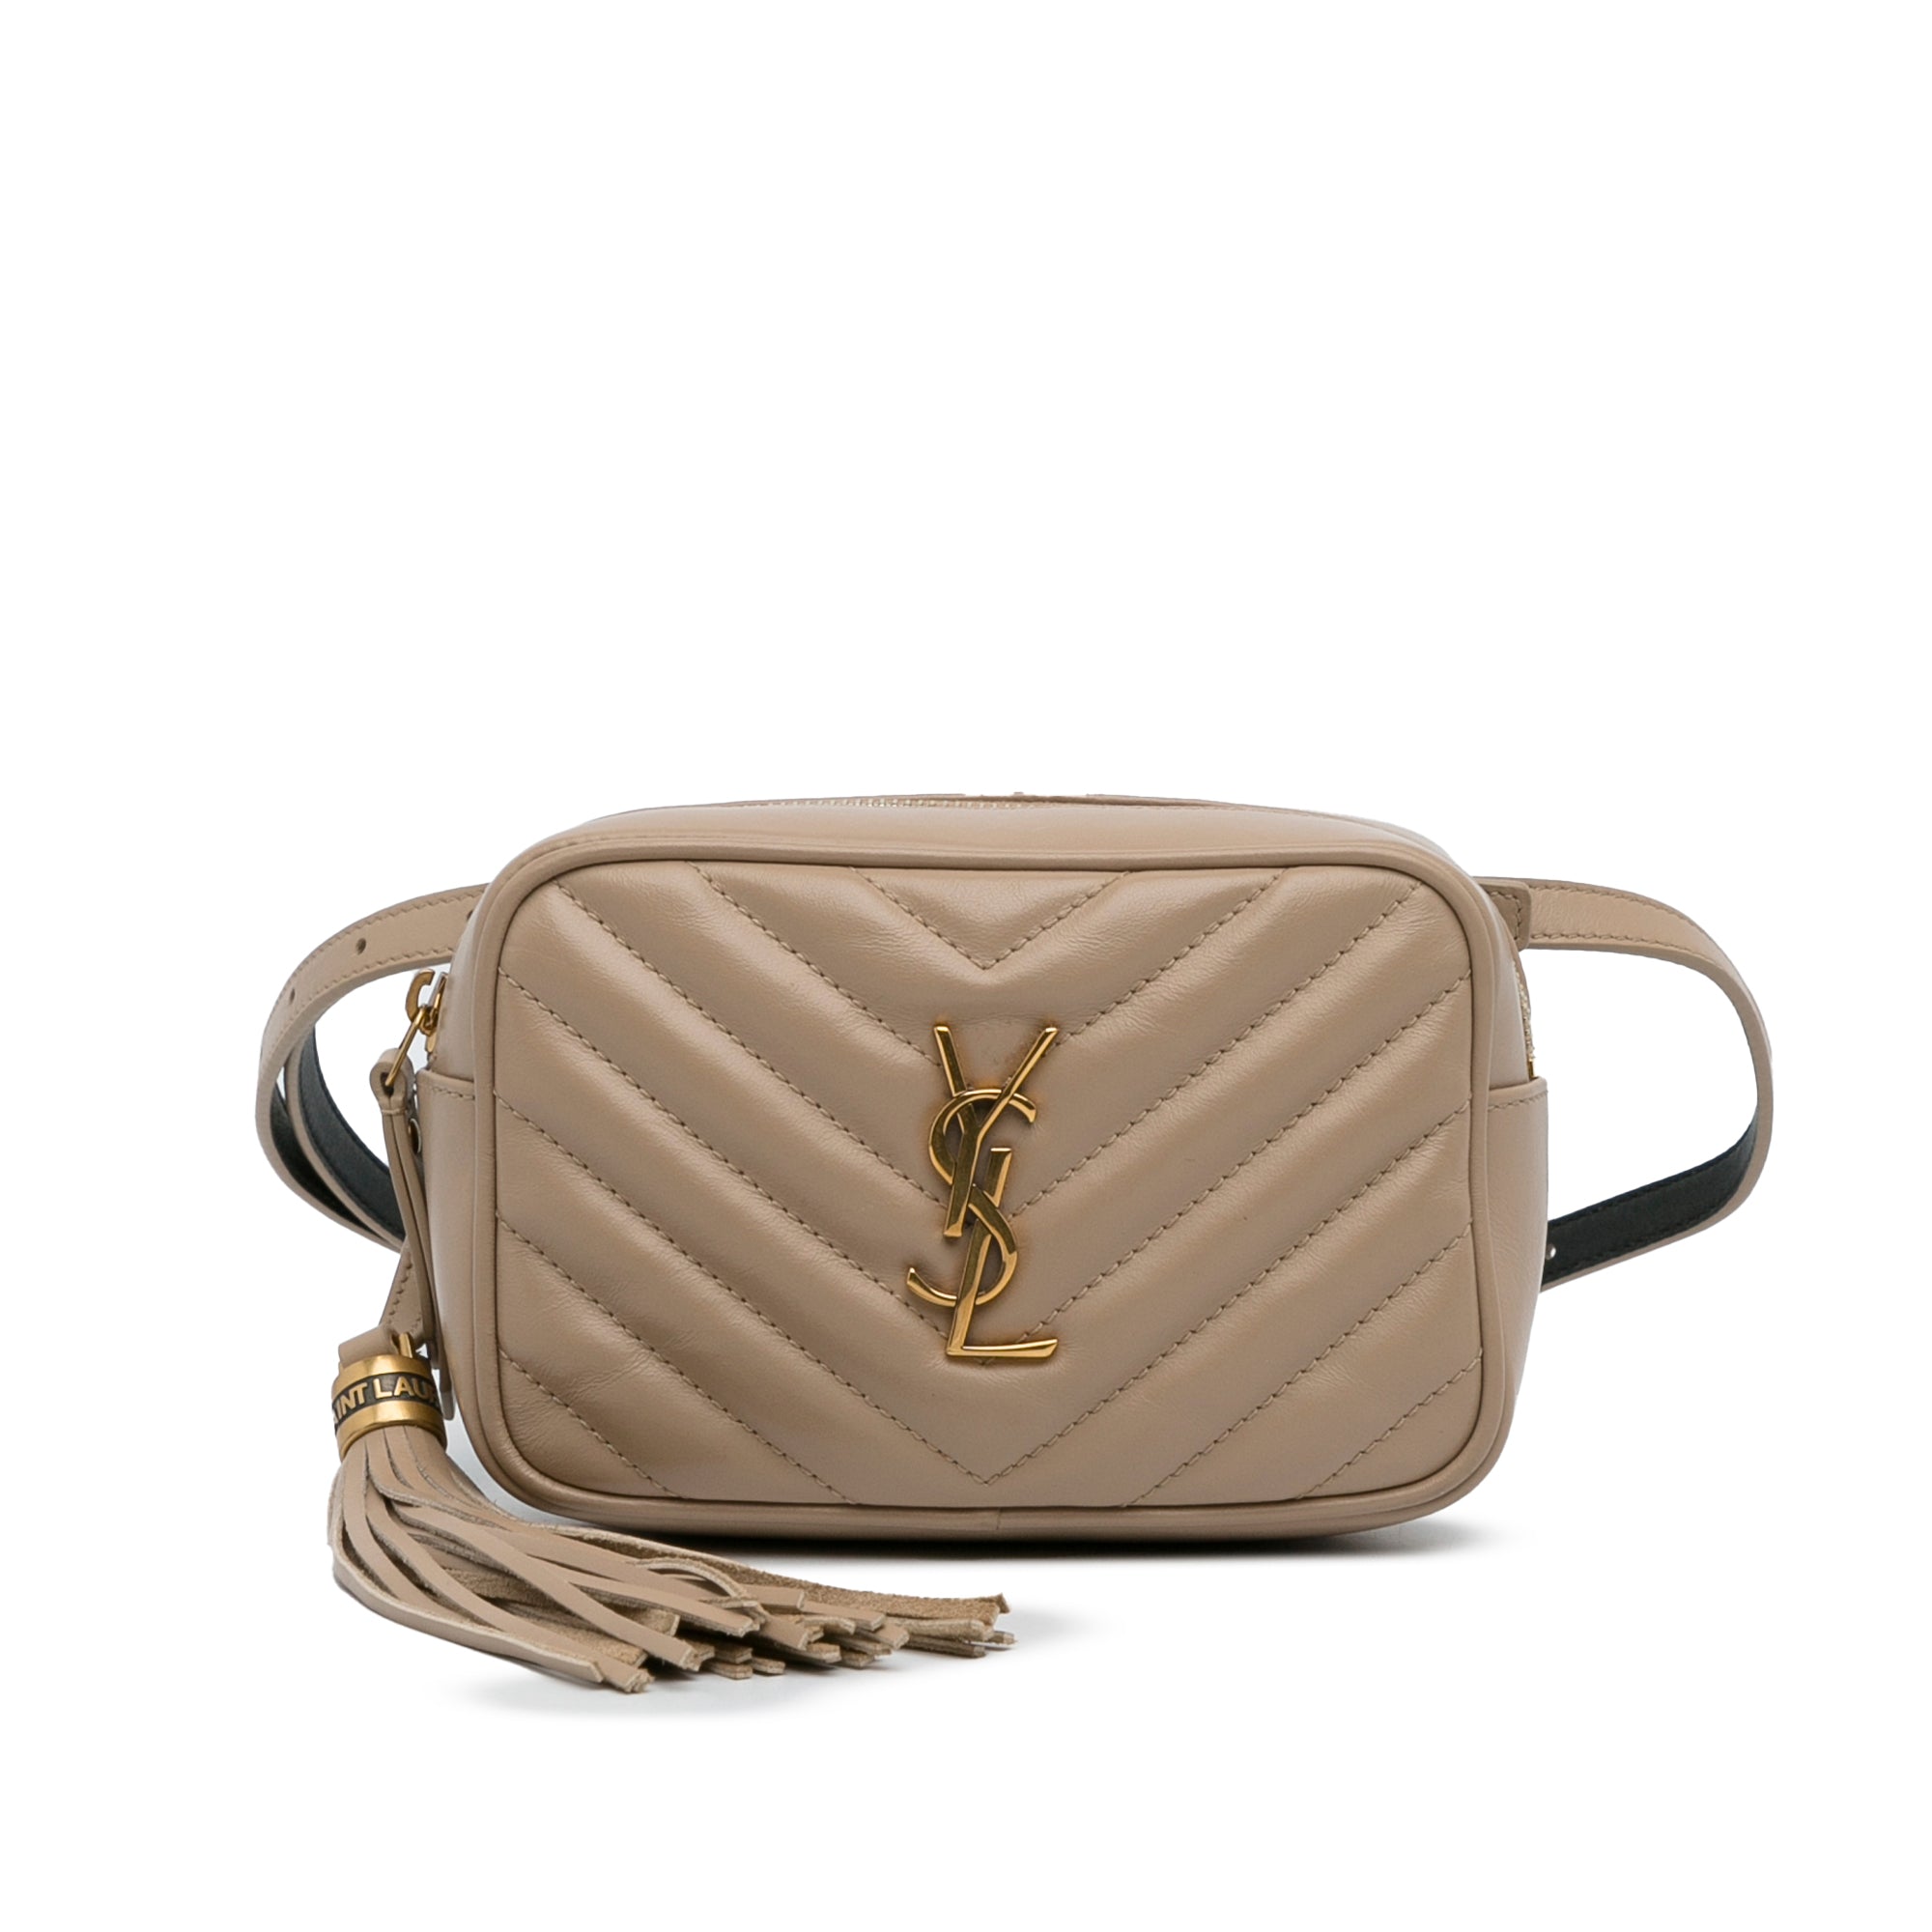 Louis Vuitton - Authenticated Twist Belt Wallet on Chain Handbag - Leather Black Plain for Women, Very Good Condition